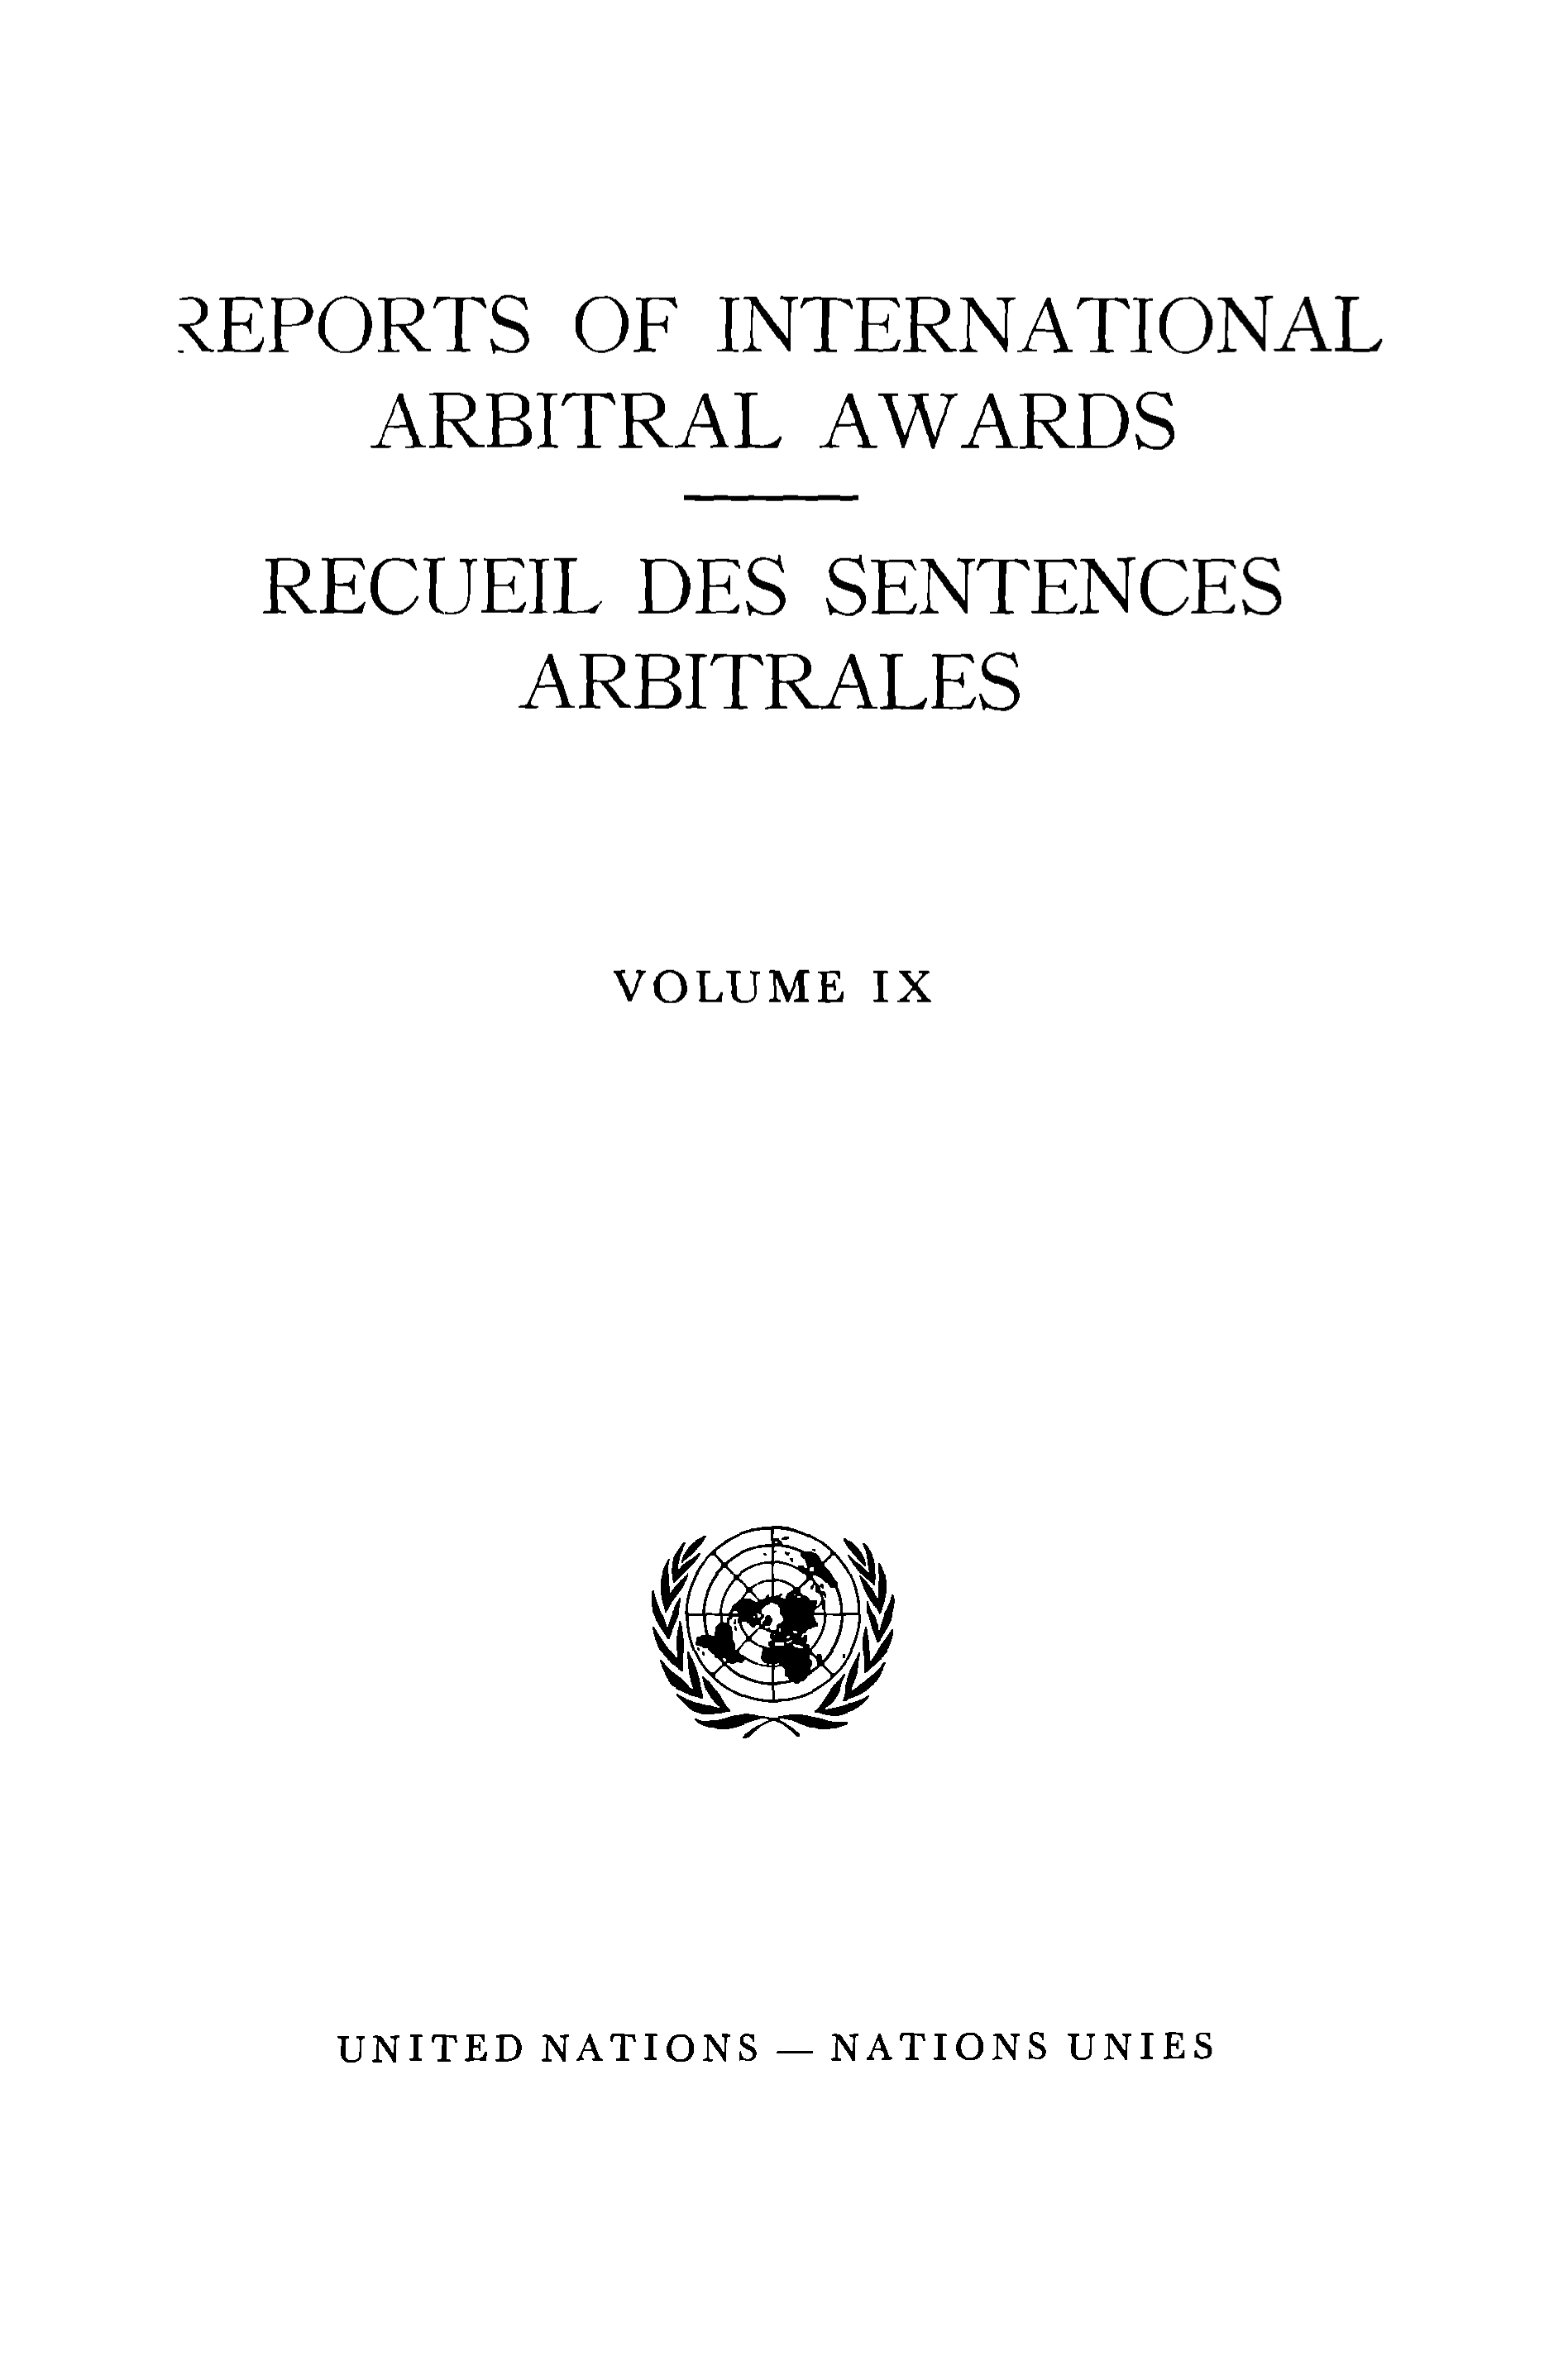 image of Reports of International Arbitral Awards, Vol. IX